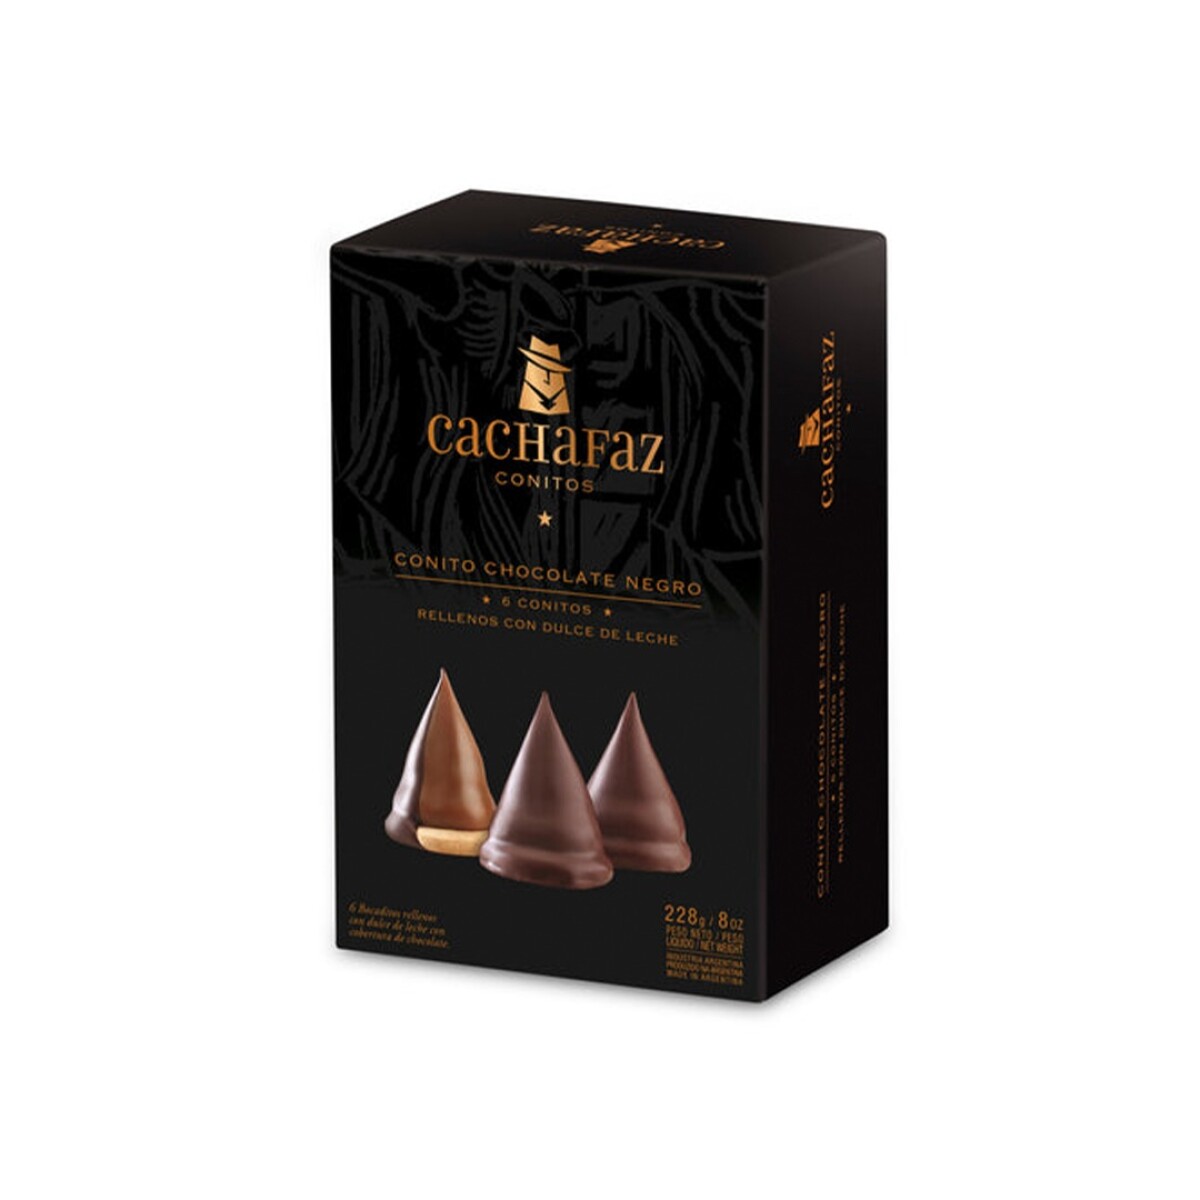 Caja X 6 Conitos Cachafaz Chocolate Negro - 001 